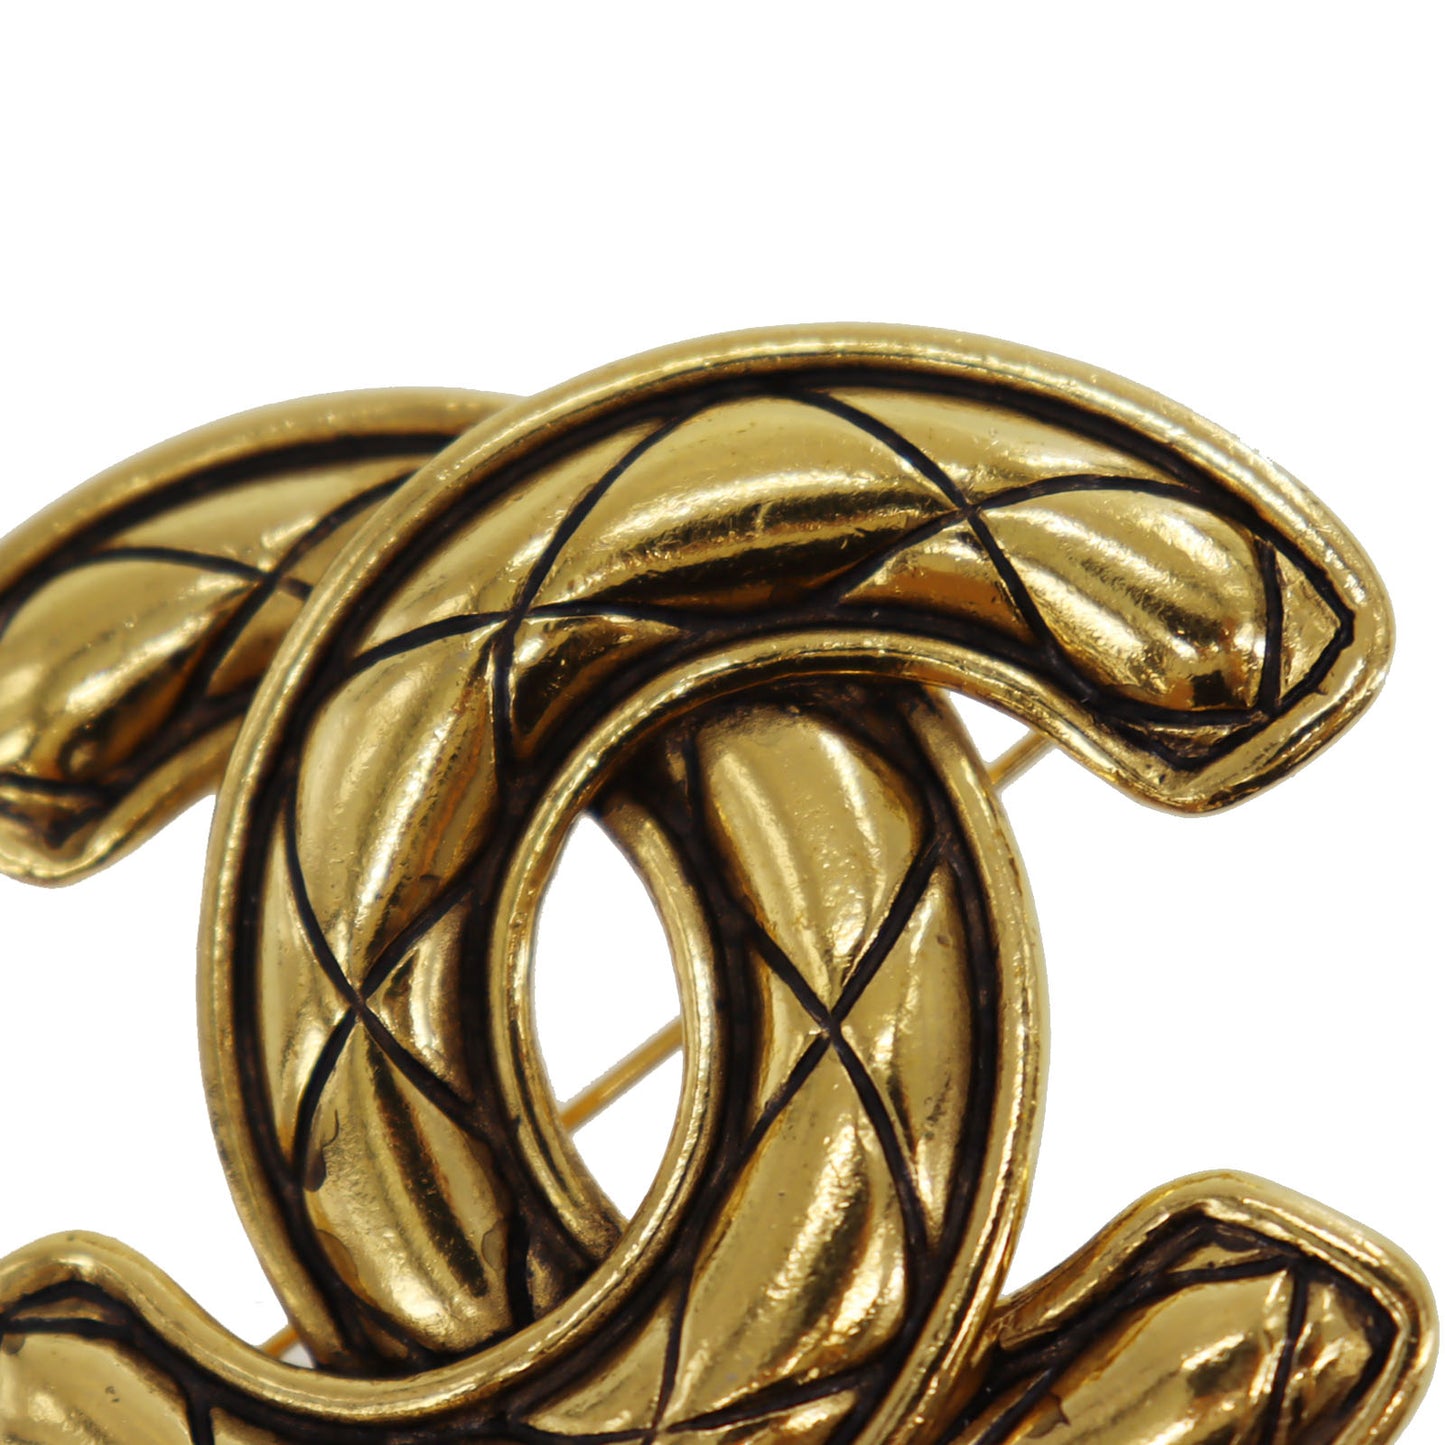 CHANEL CC Logos Matelasse Pin Brooch Gold Plated 1152 #BZ424